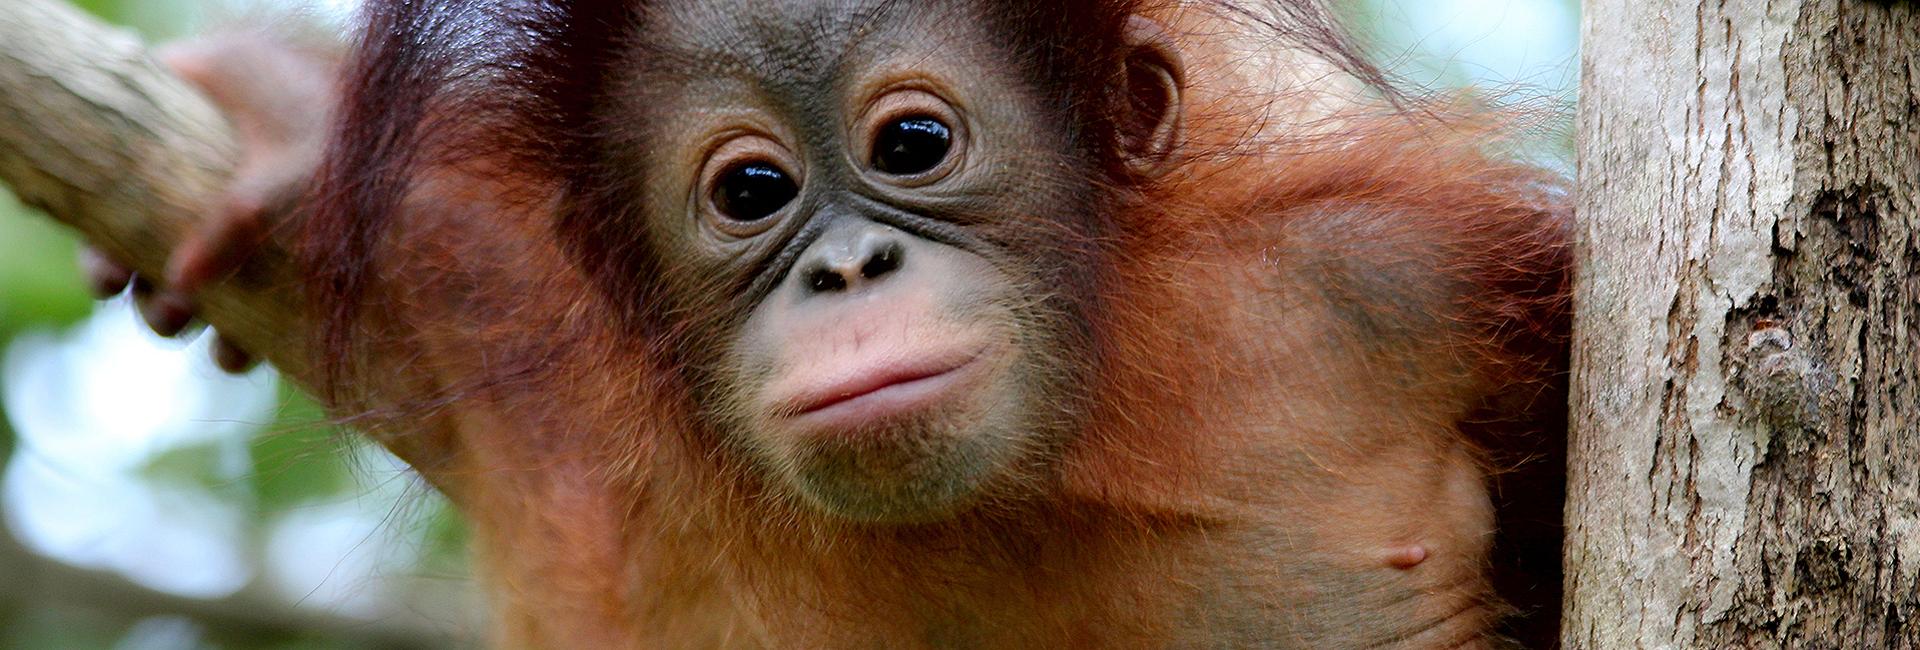 Orangutan Conservation